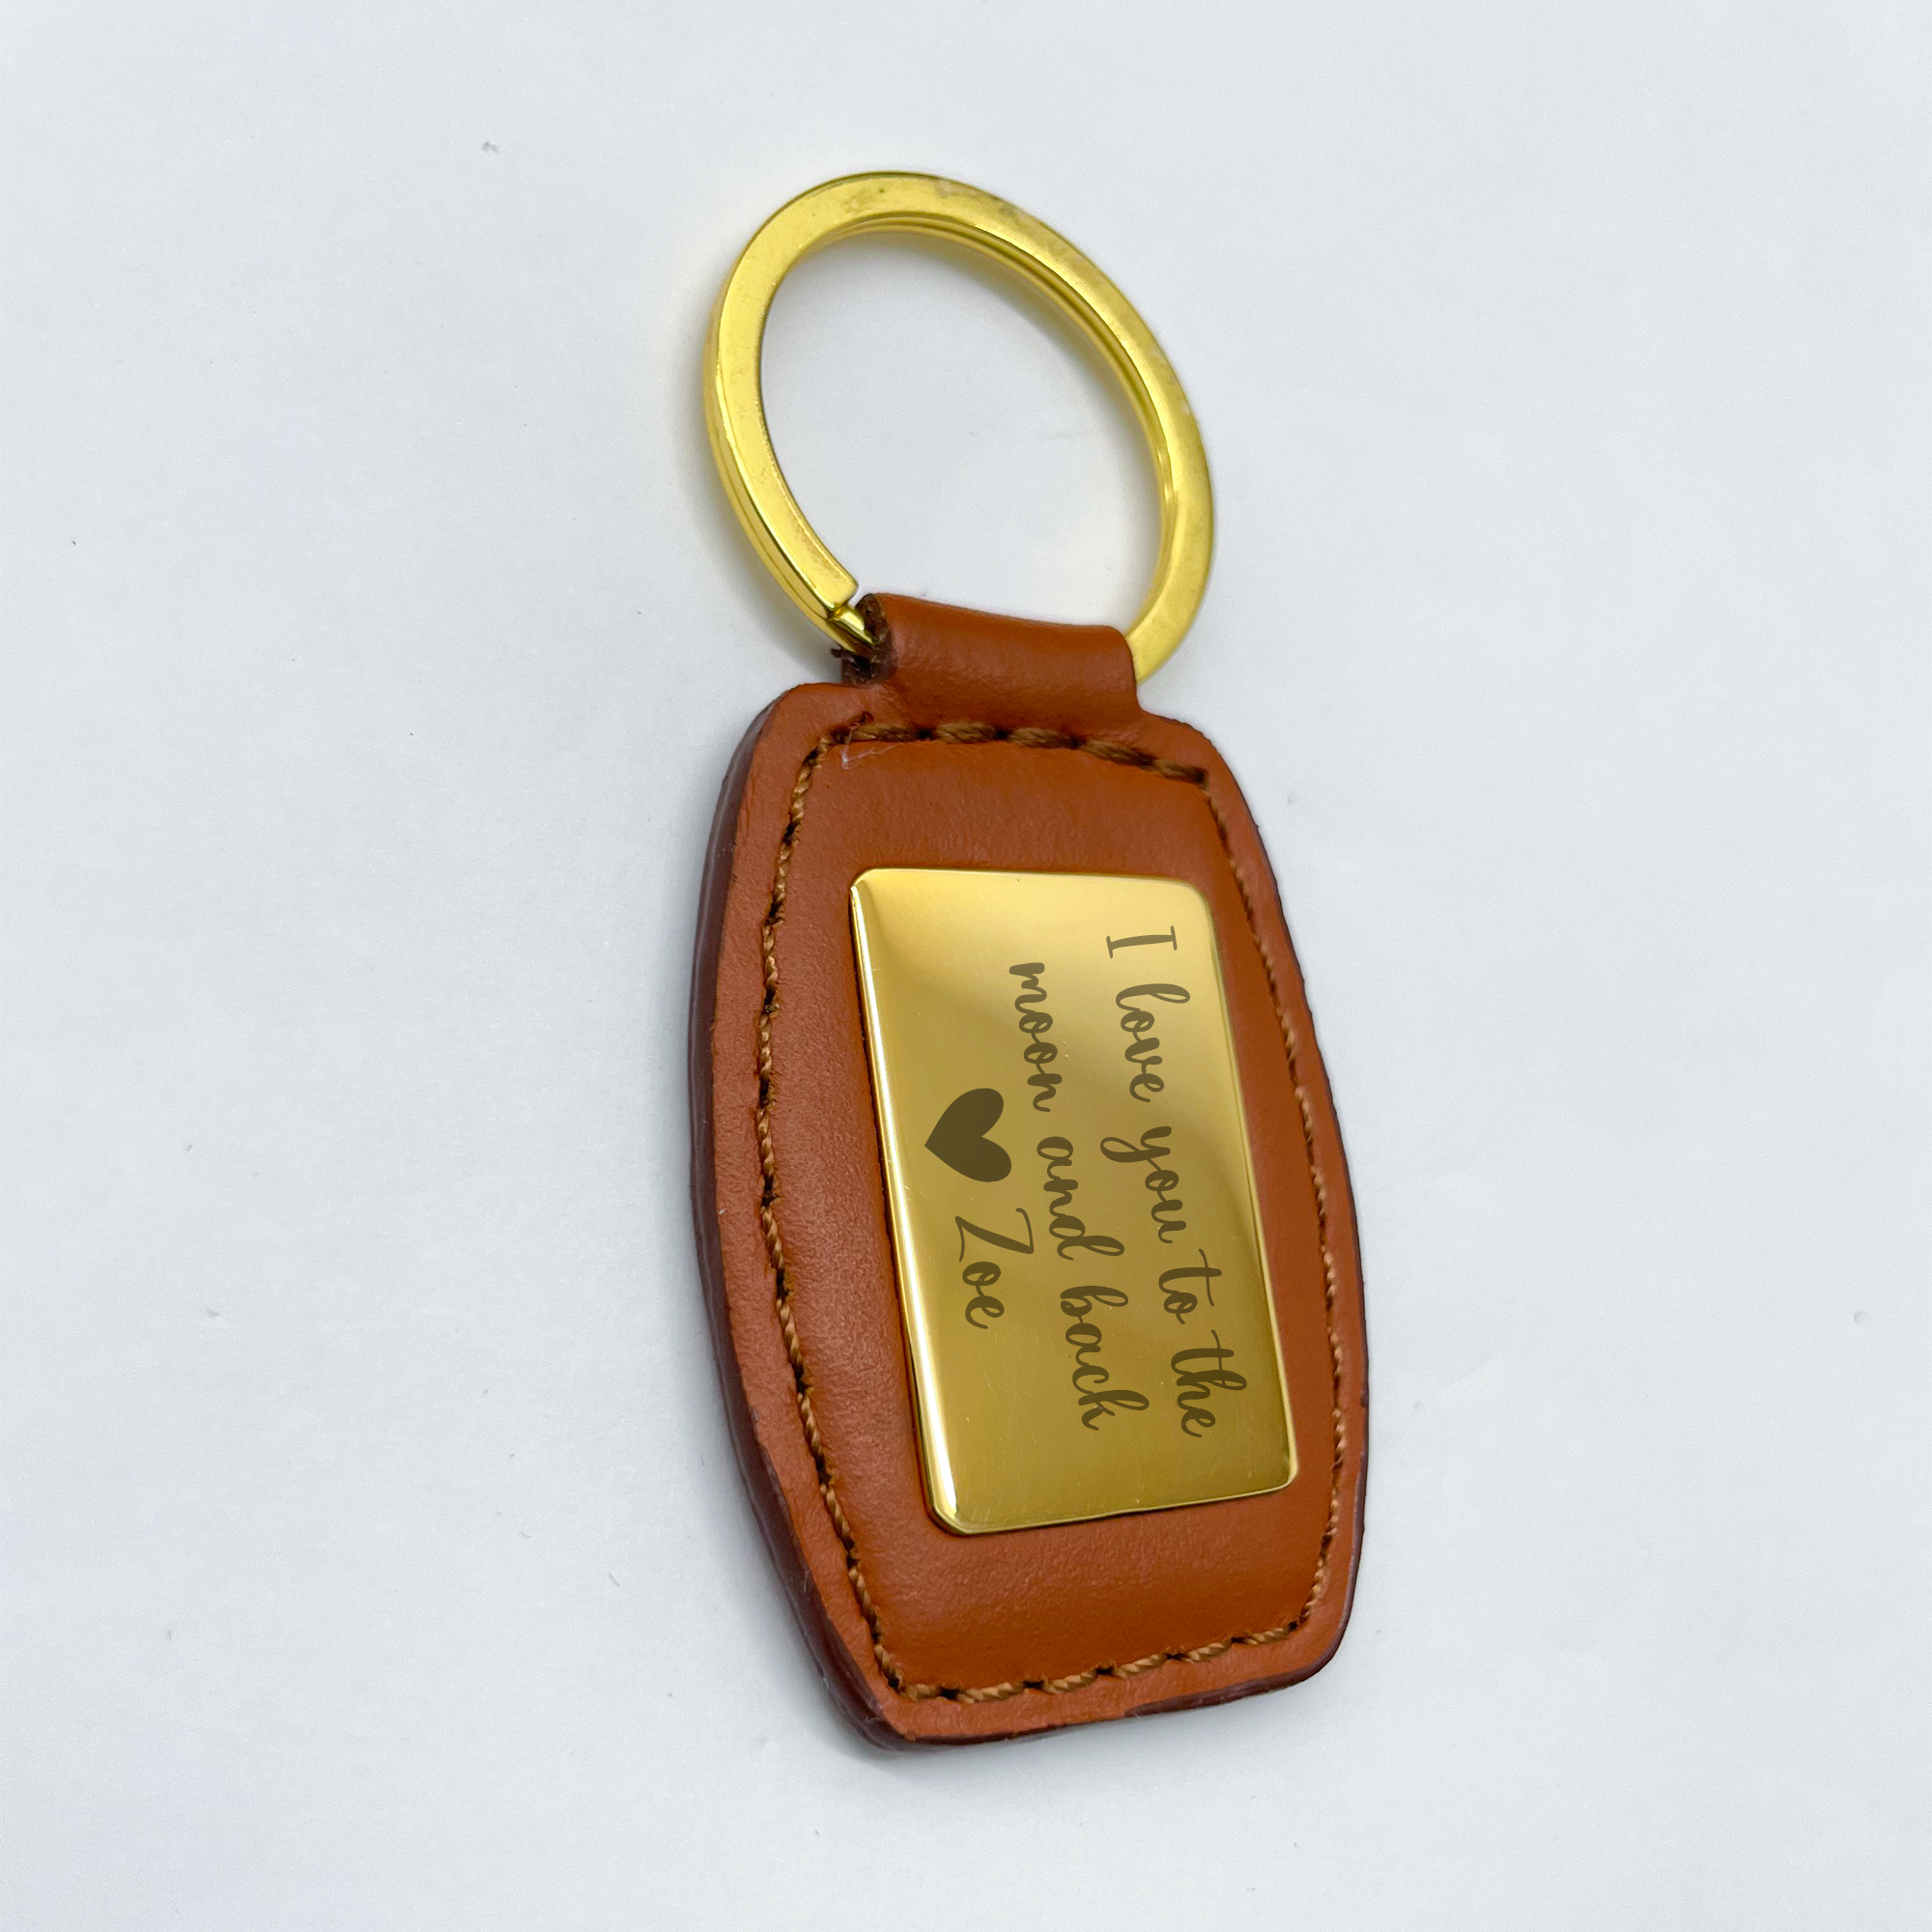 P U Leather Keychain BR 400